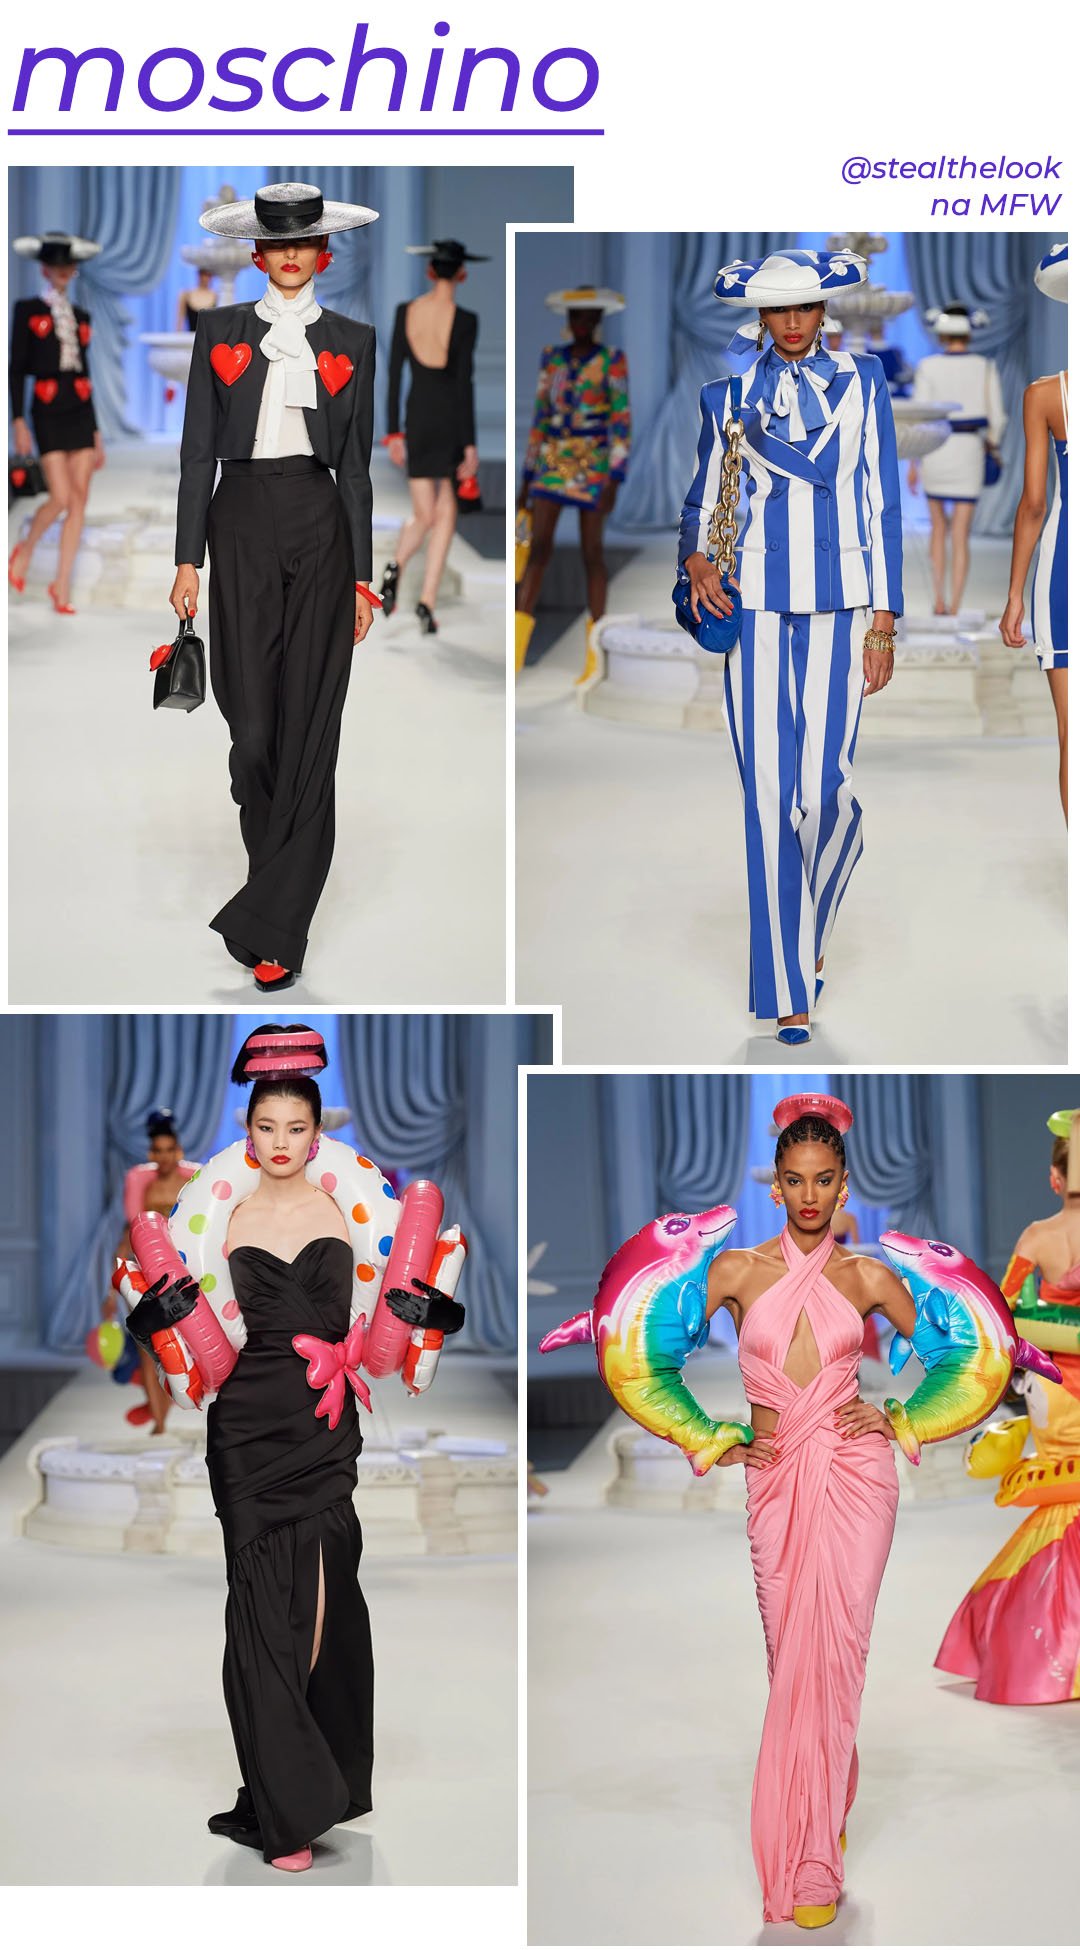 Moschino S/S 2023 - roupas diversas - Milano Fashion Week - Primavera - modelo andando pela passarela - https://stealthelook.com.br